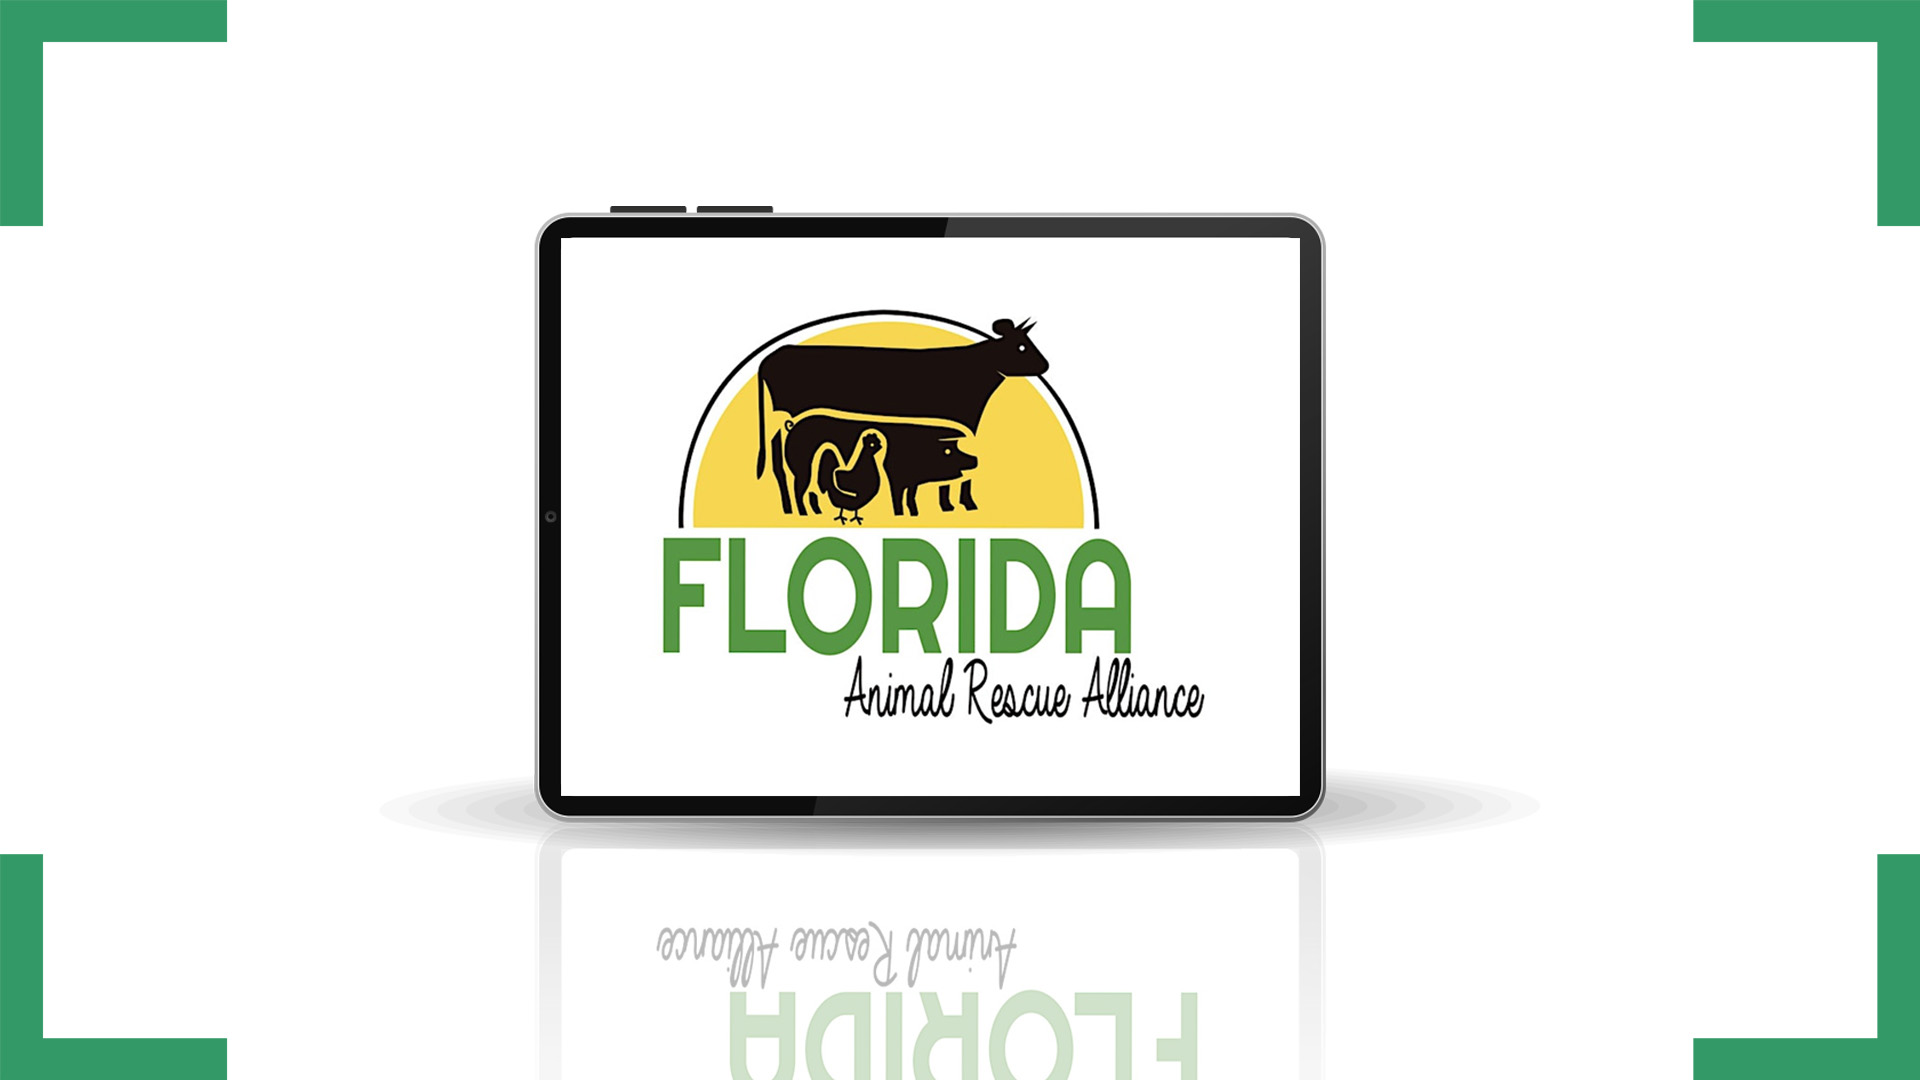 Florida Animal Rescue Alliance